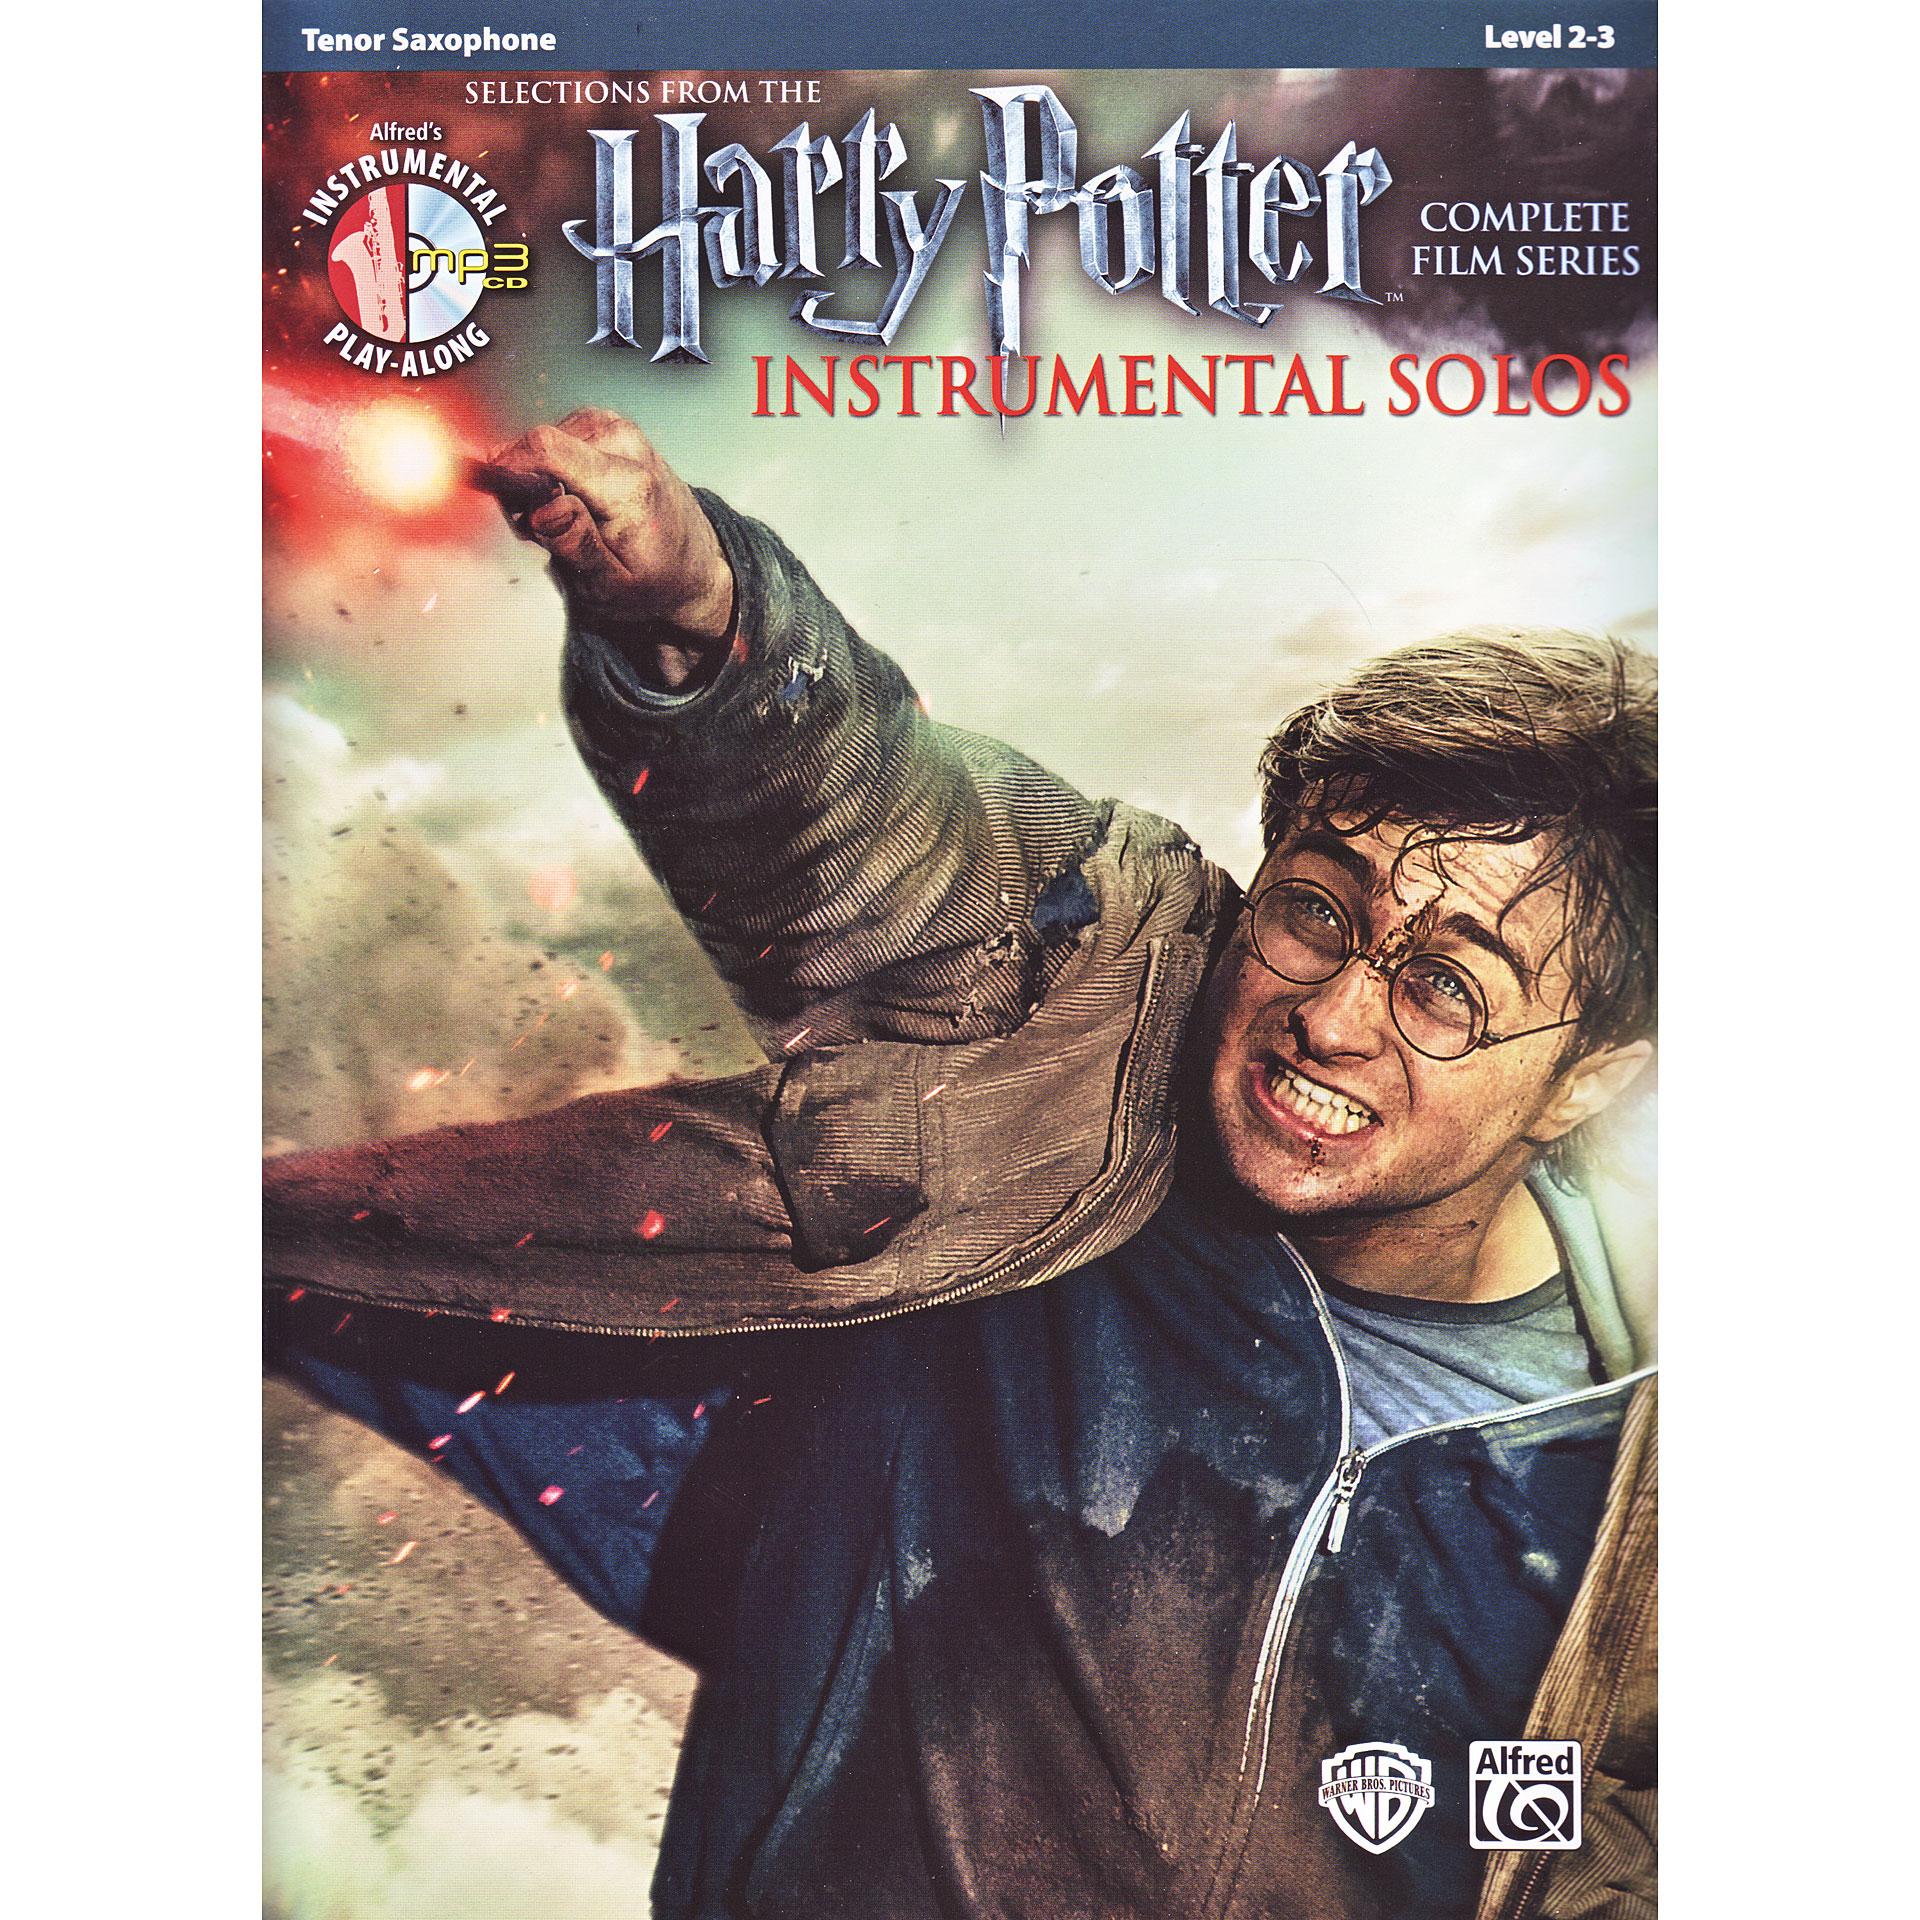 Foto Alfred KDM Harry Potter Instrumental Solos Complete Film Series, foto 731005